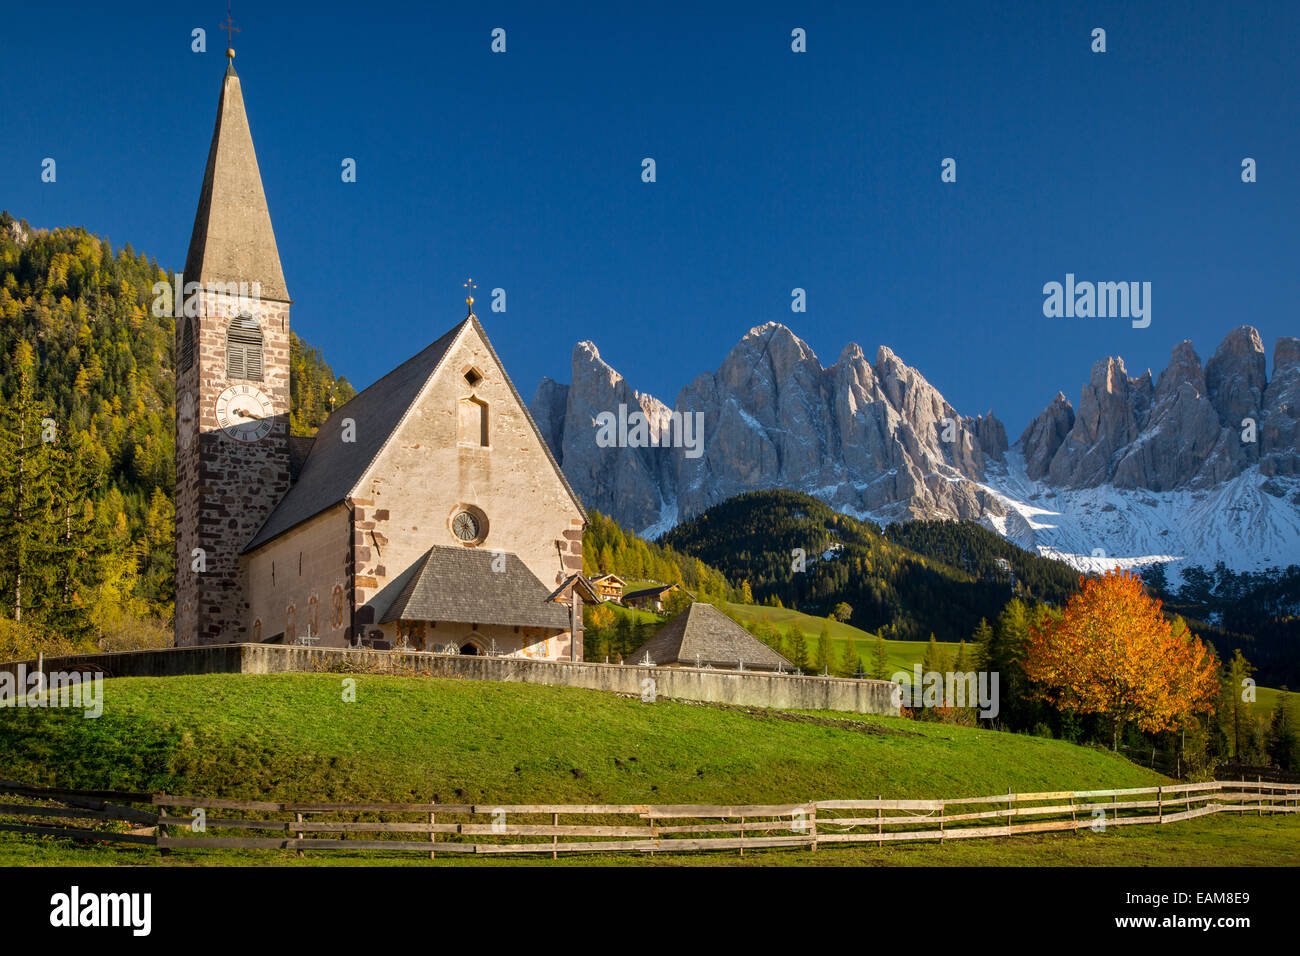 Santa Maddelena Geisler Spitzen ci-dessous dans les Dolomites, Val di Funes, Trentin-Haut-Adige, Italie Banque D'Images